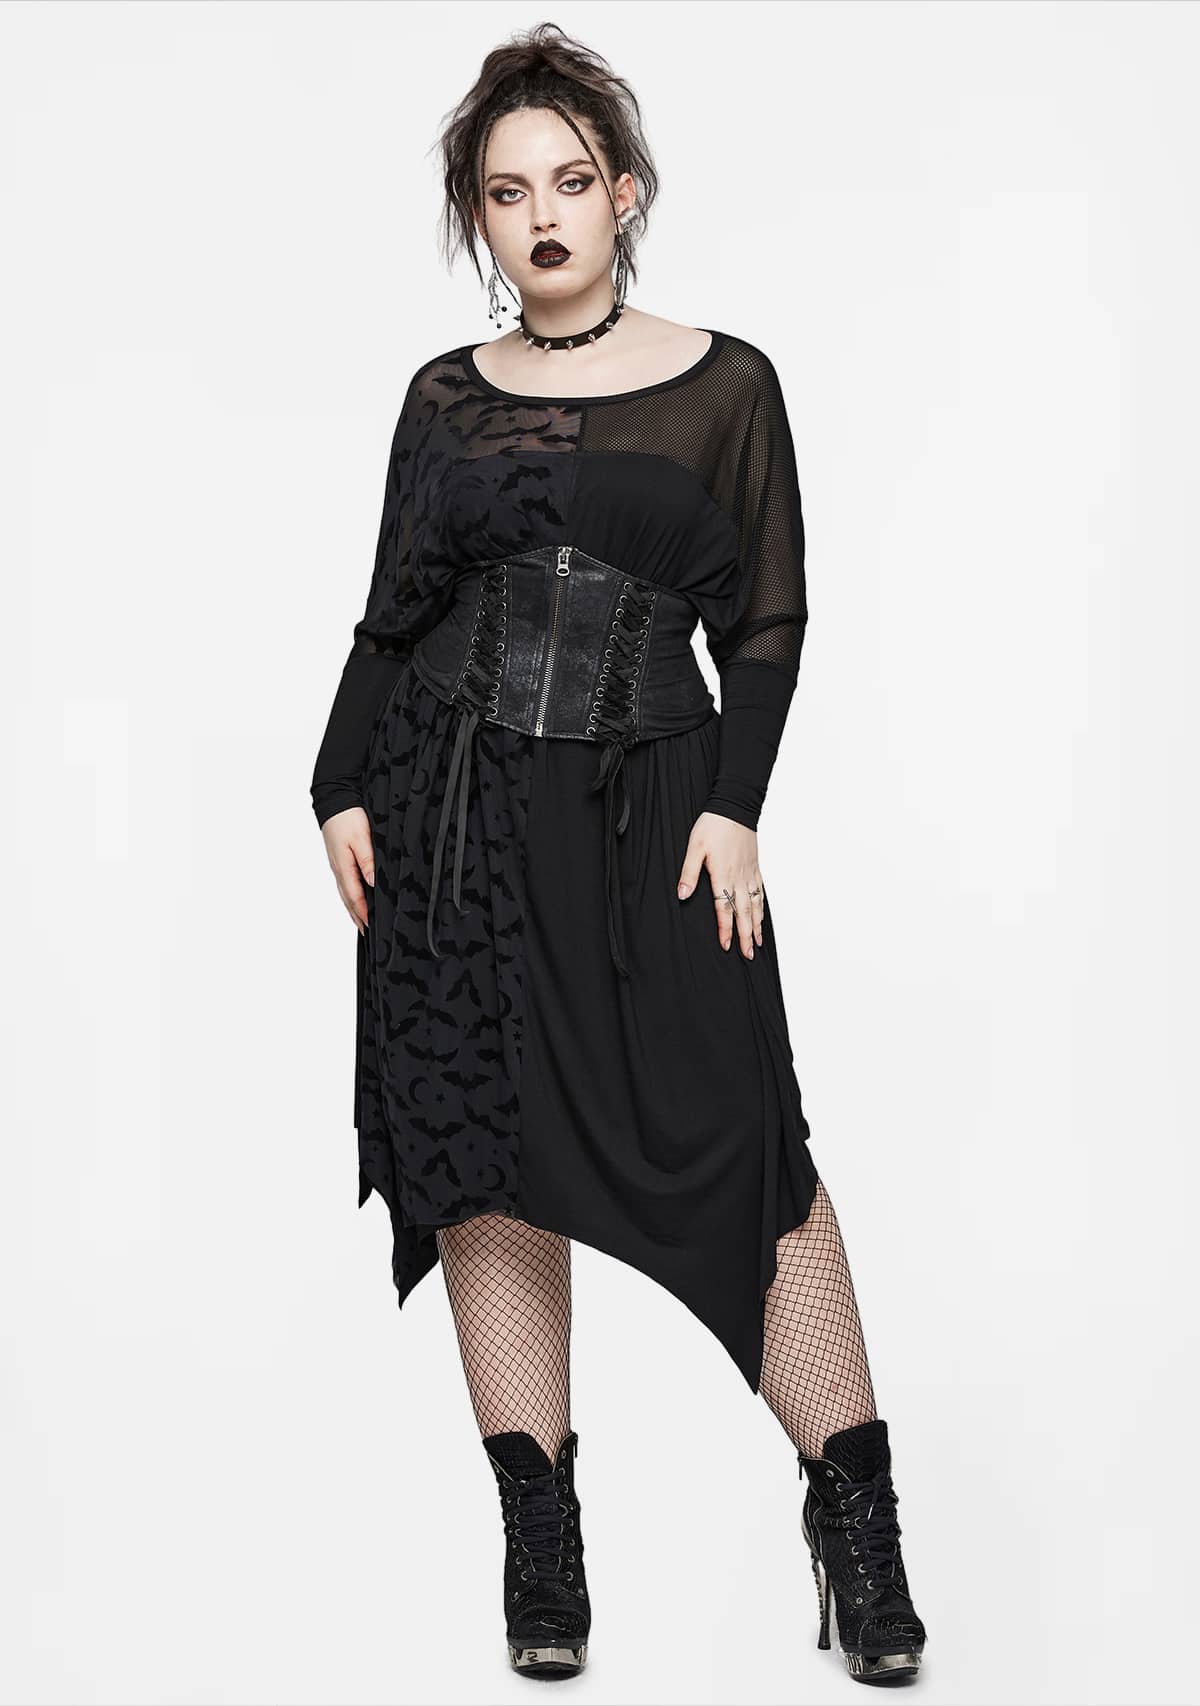 Plus Size Gothic Clothing - Good Goth